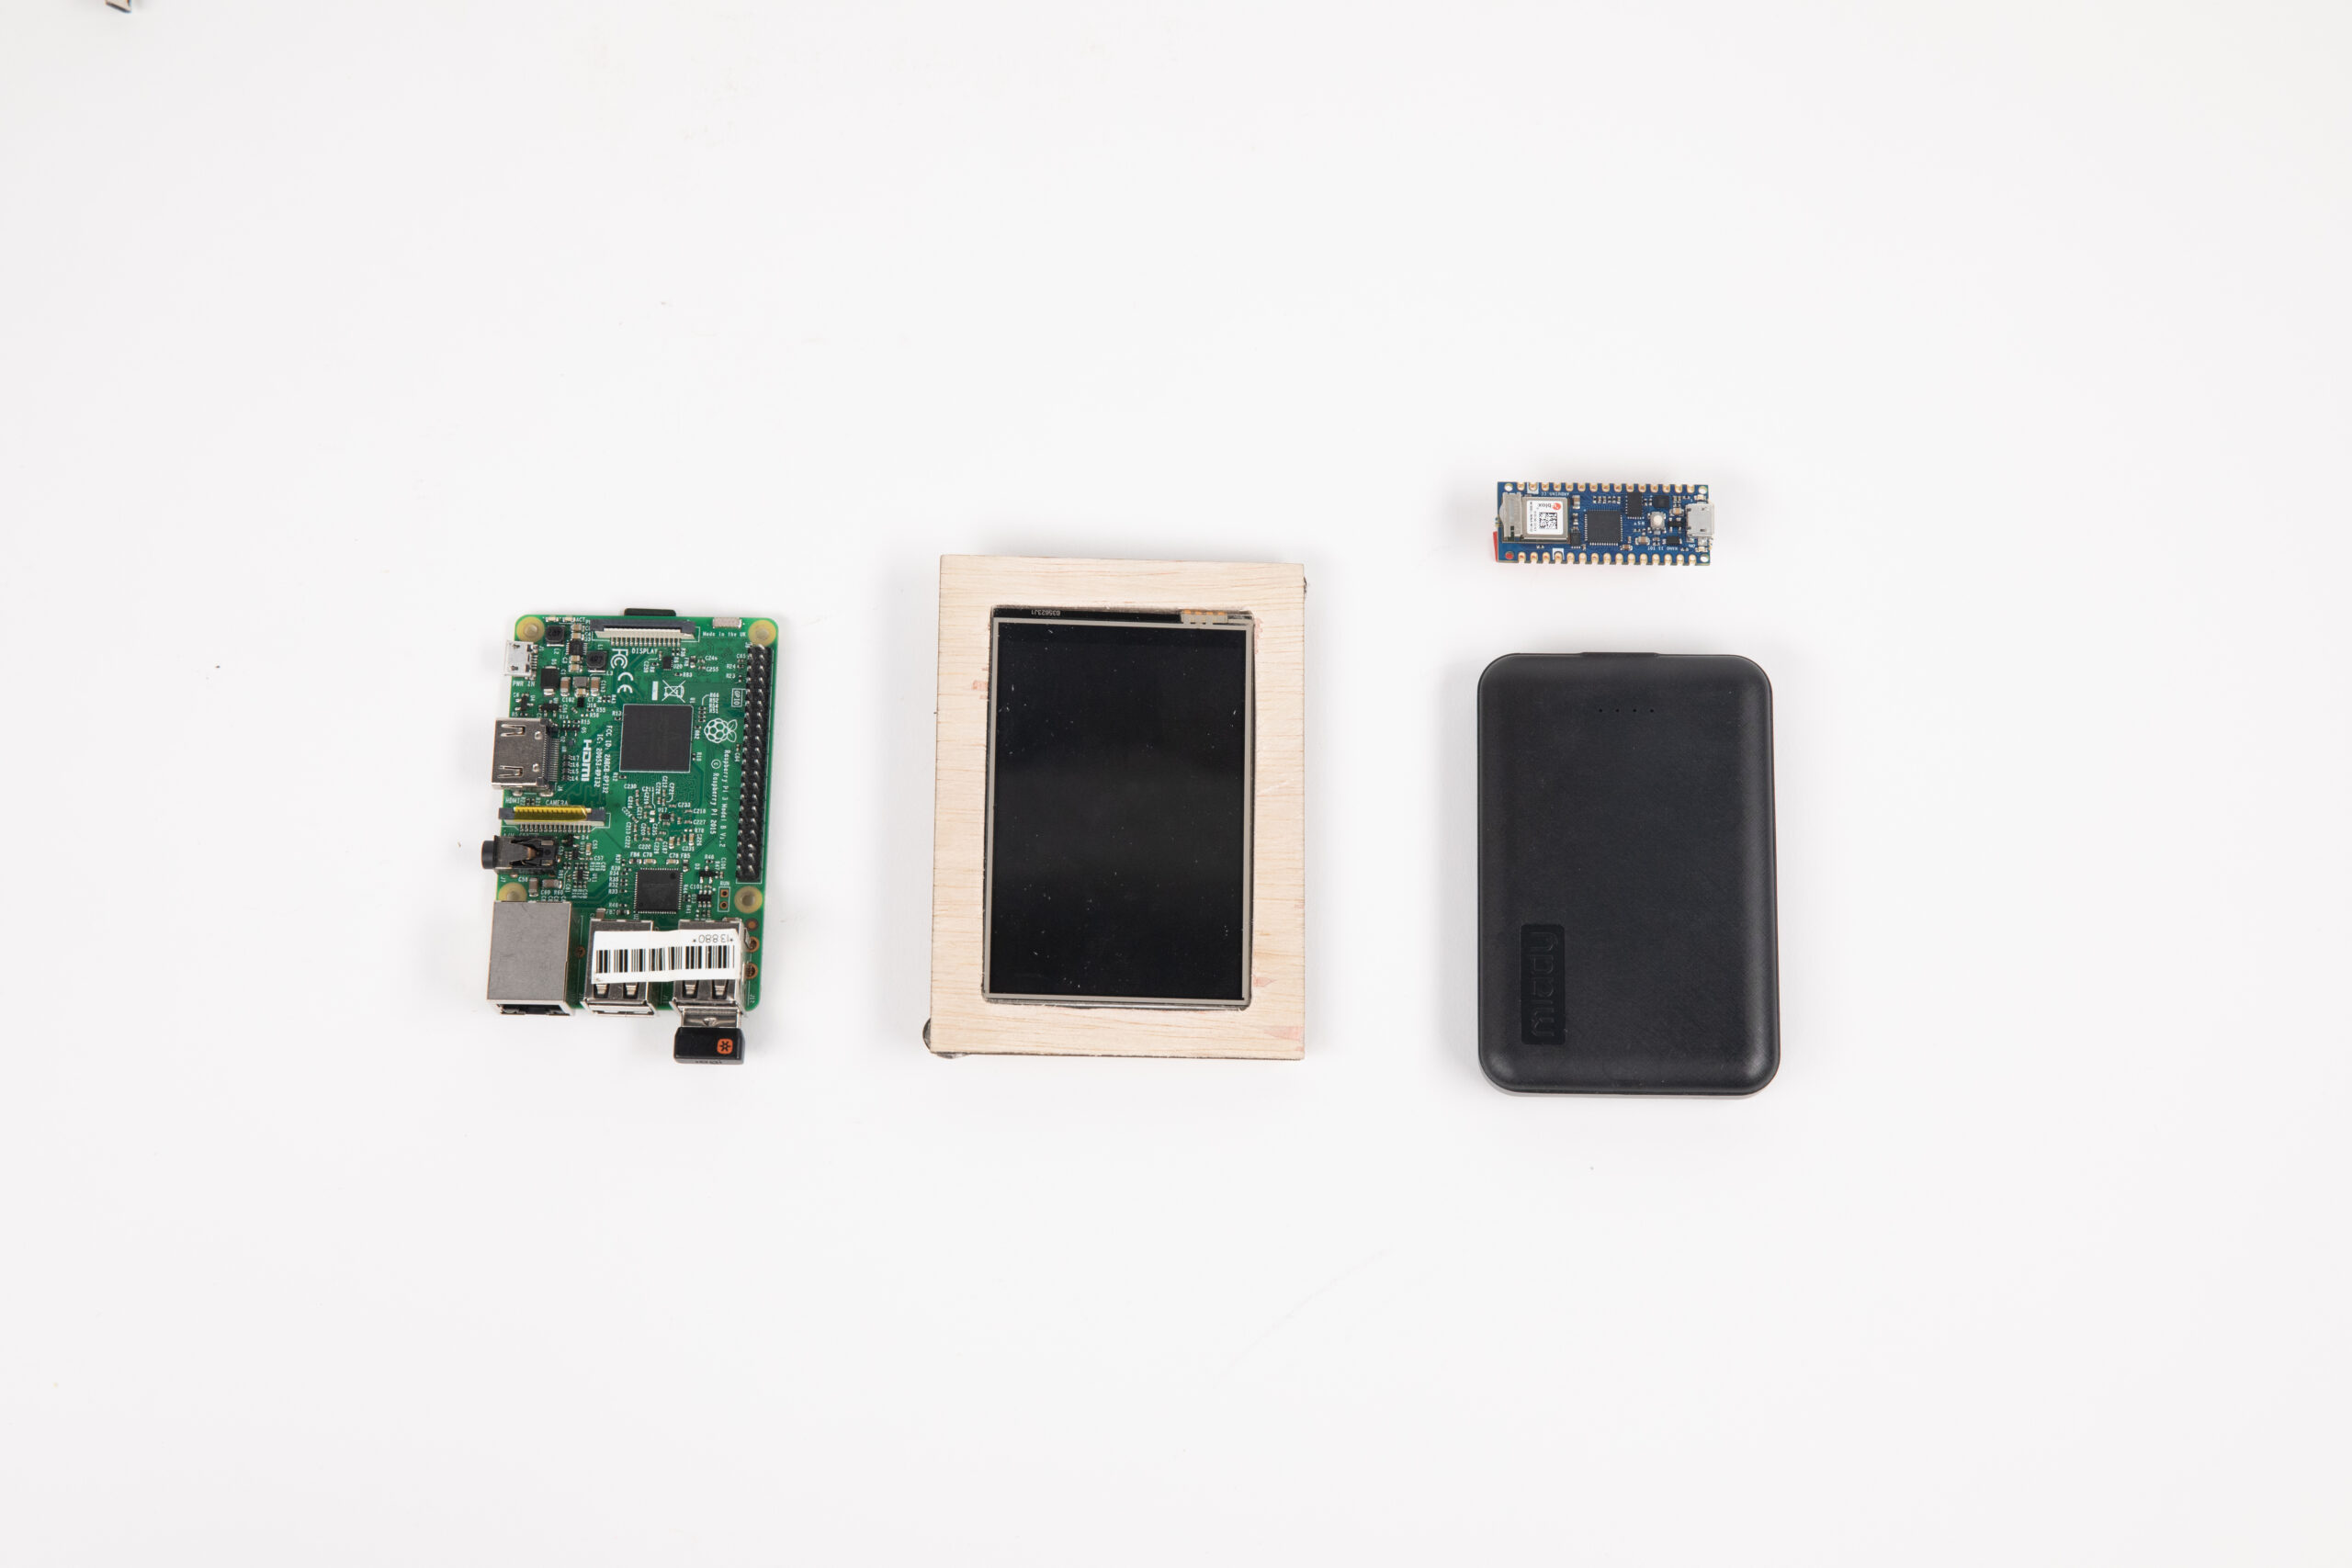 raspberry pi 3b, 3.5 inch display, arduino nano 33 iot, 5v battery pack